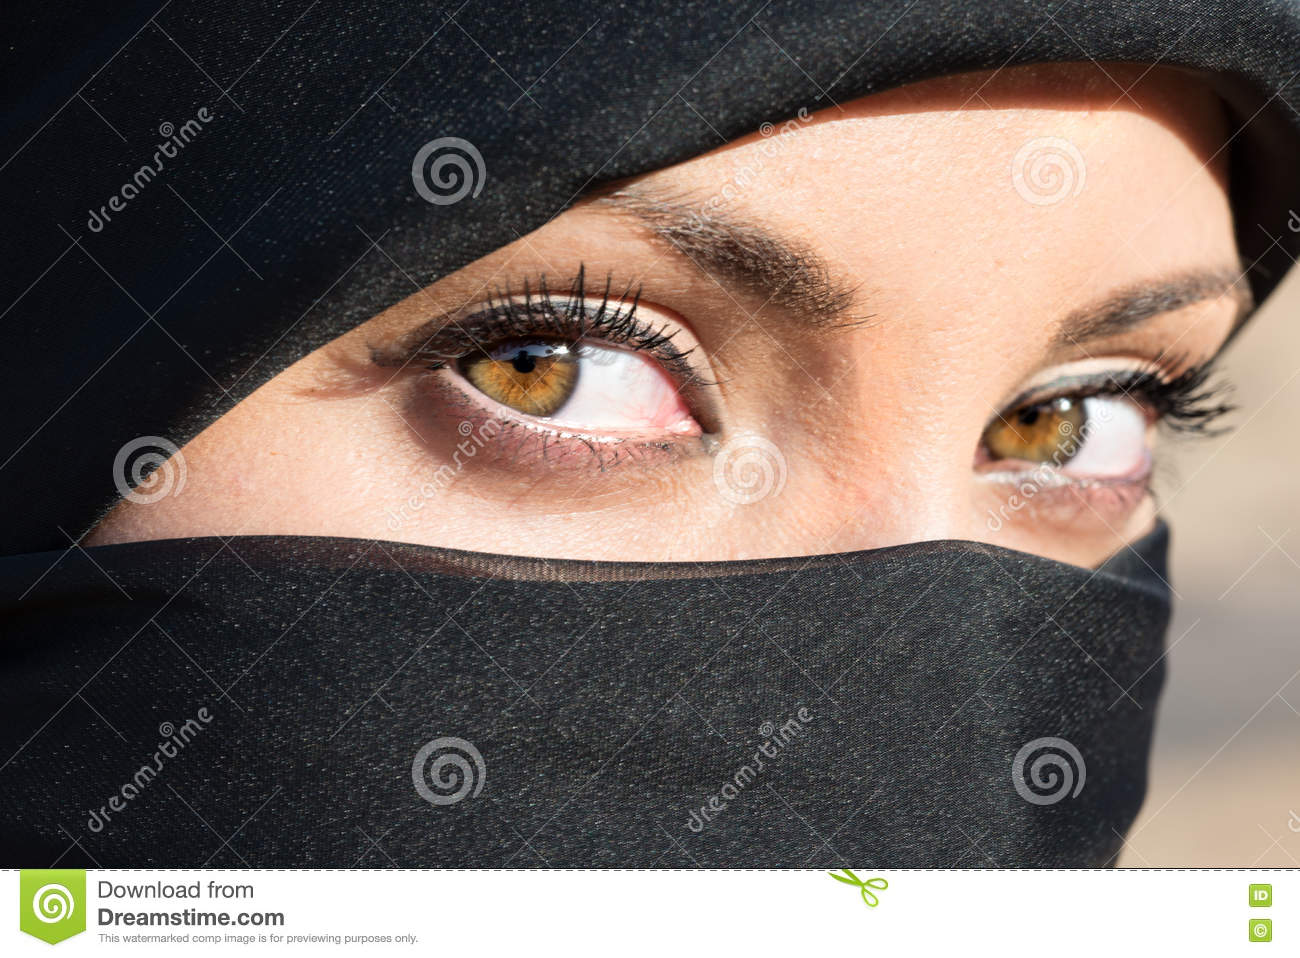 arabic-girls-eyes-hijab-wearing-70836612.jpg